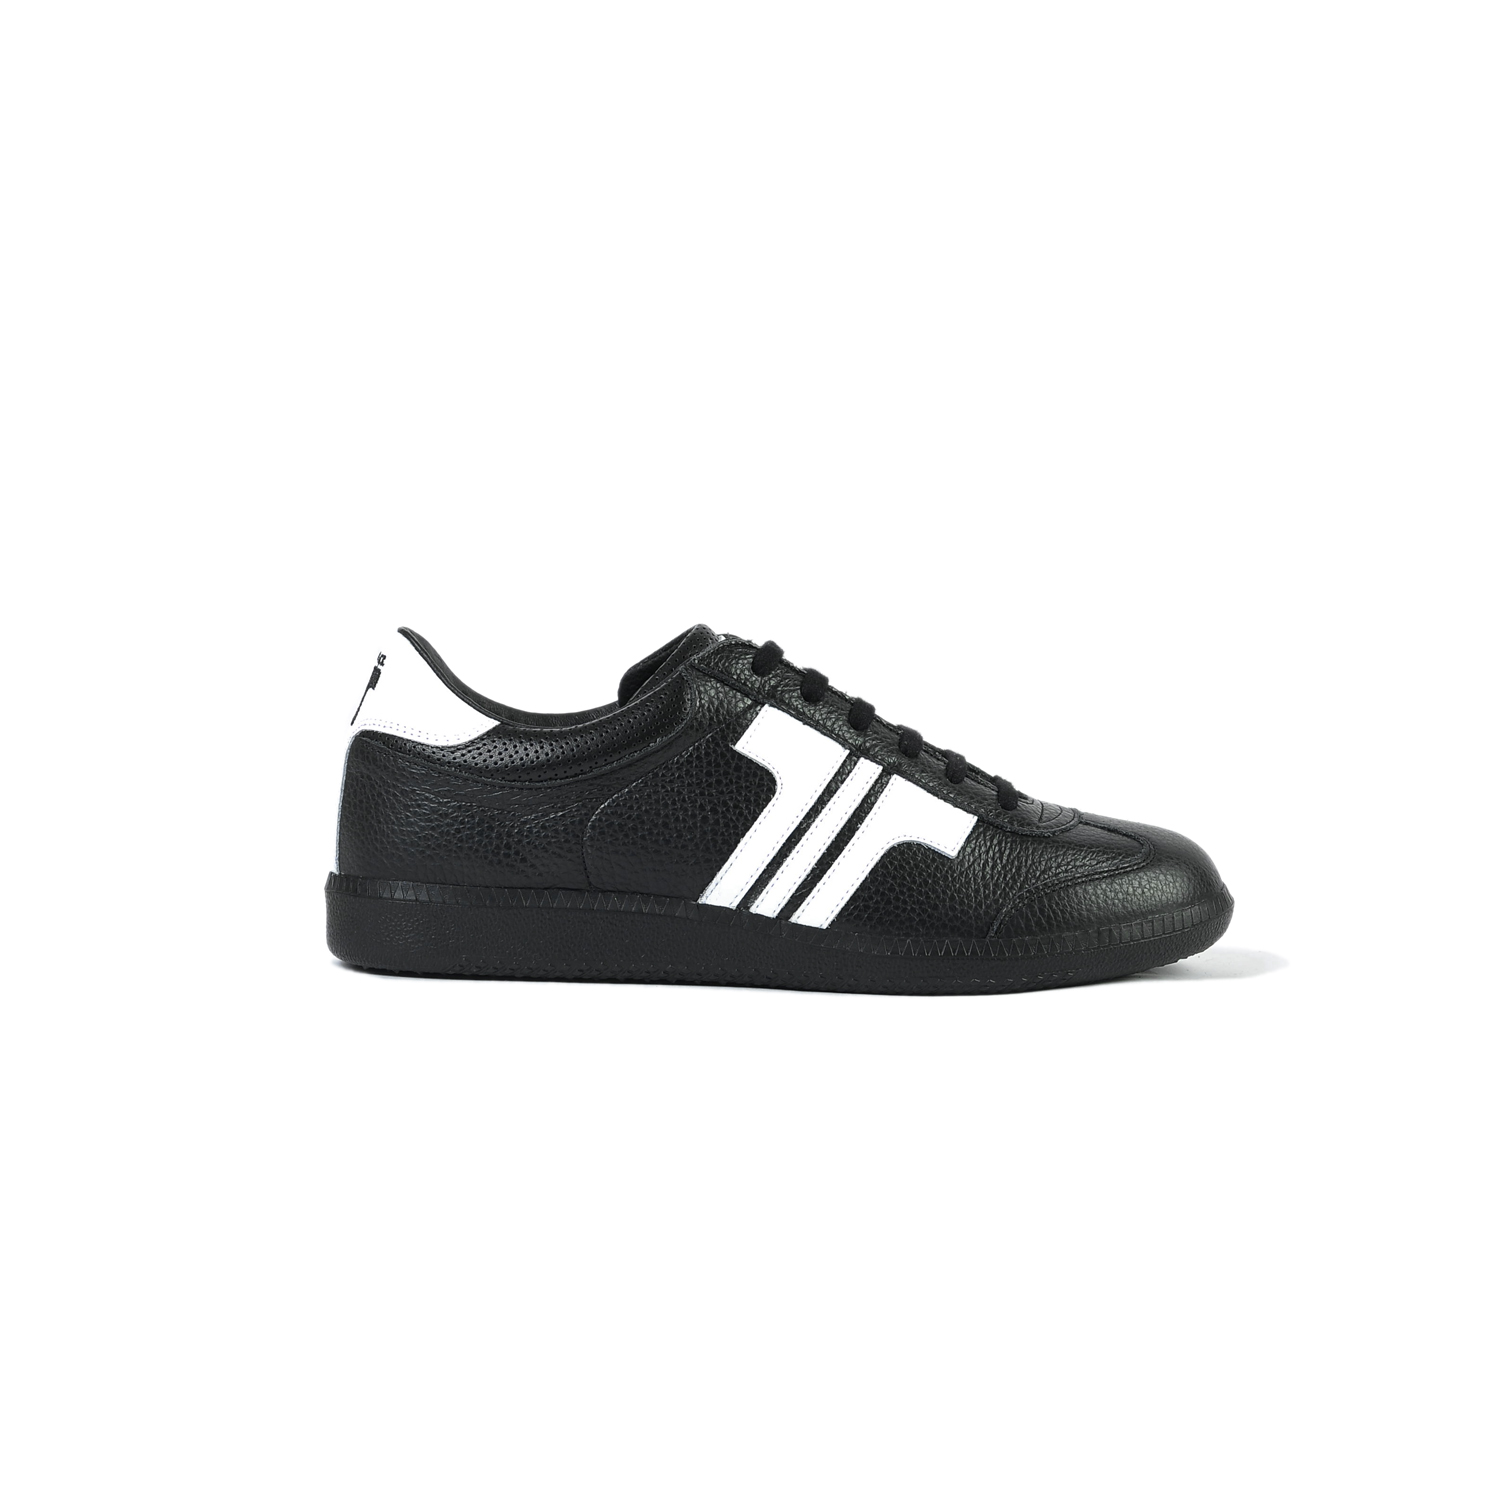 Tisza shoes - Compakt - Blacktop